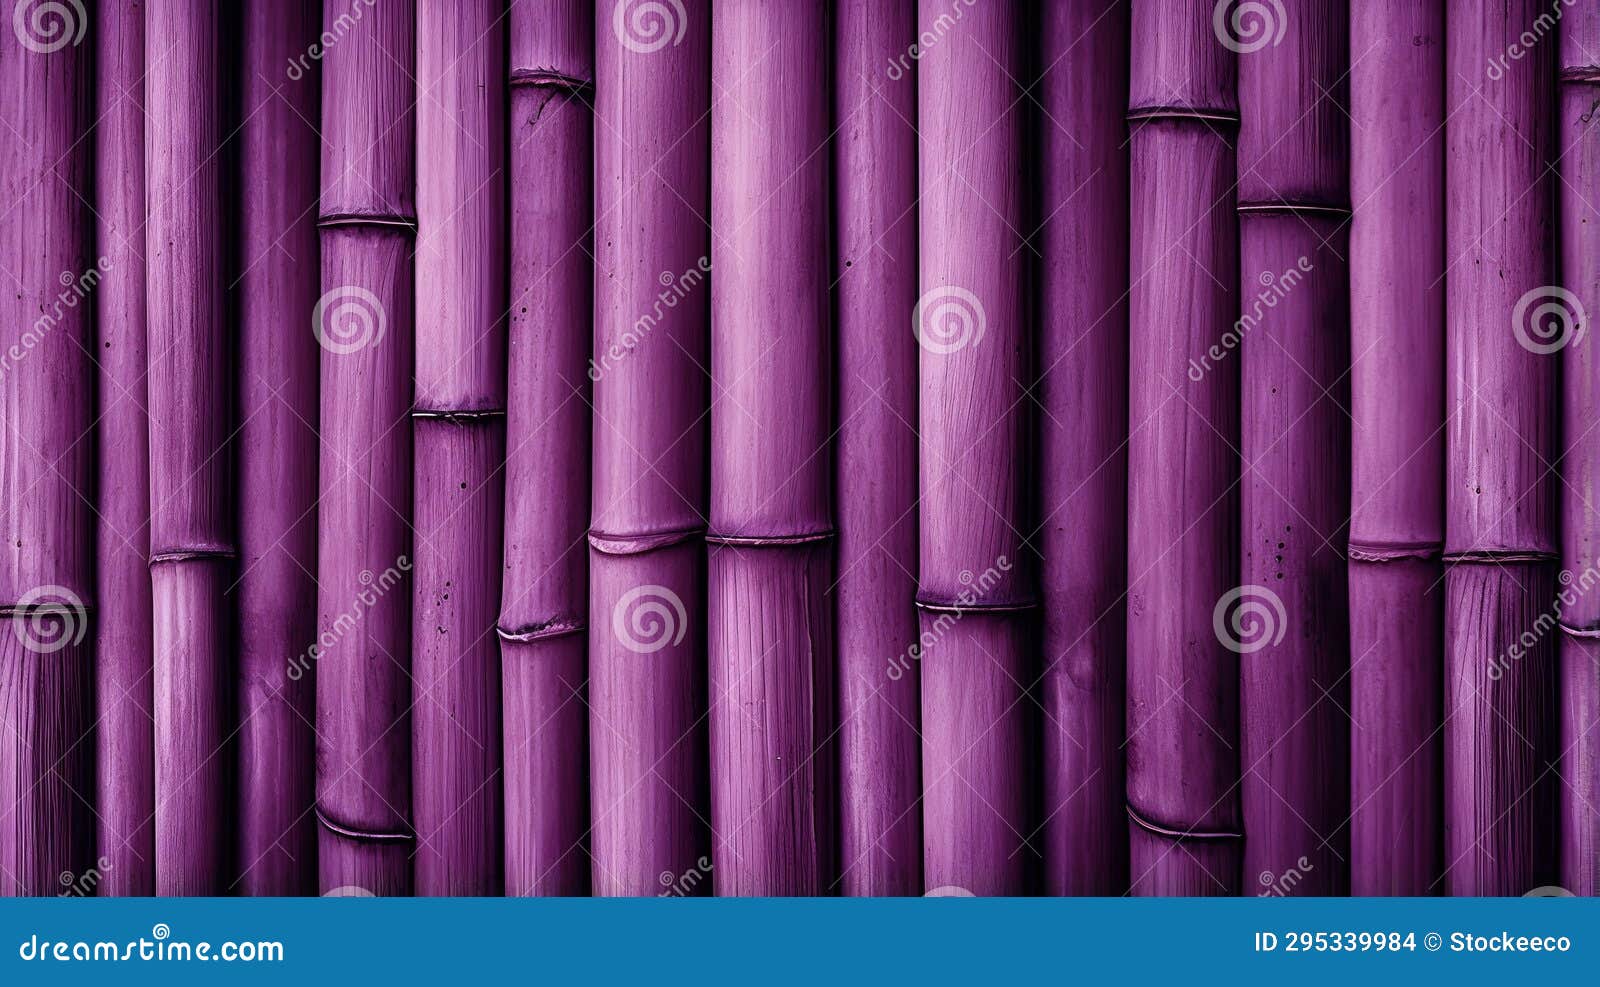 purple bamboo stalk wall texture - ricoh gr iii style